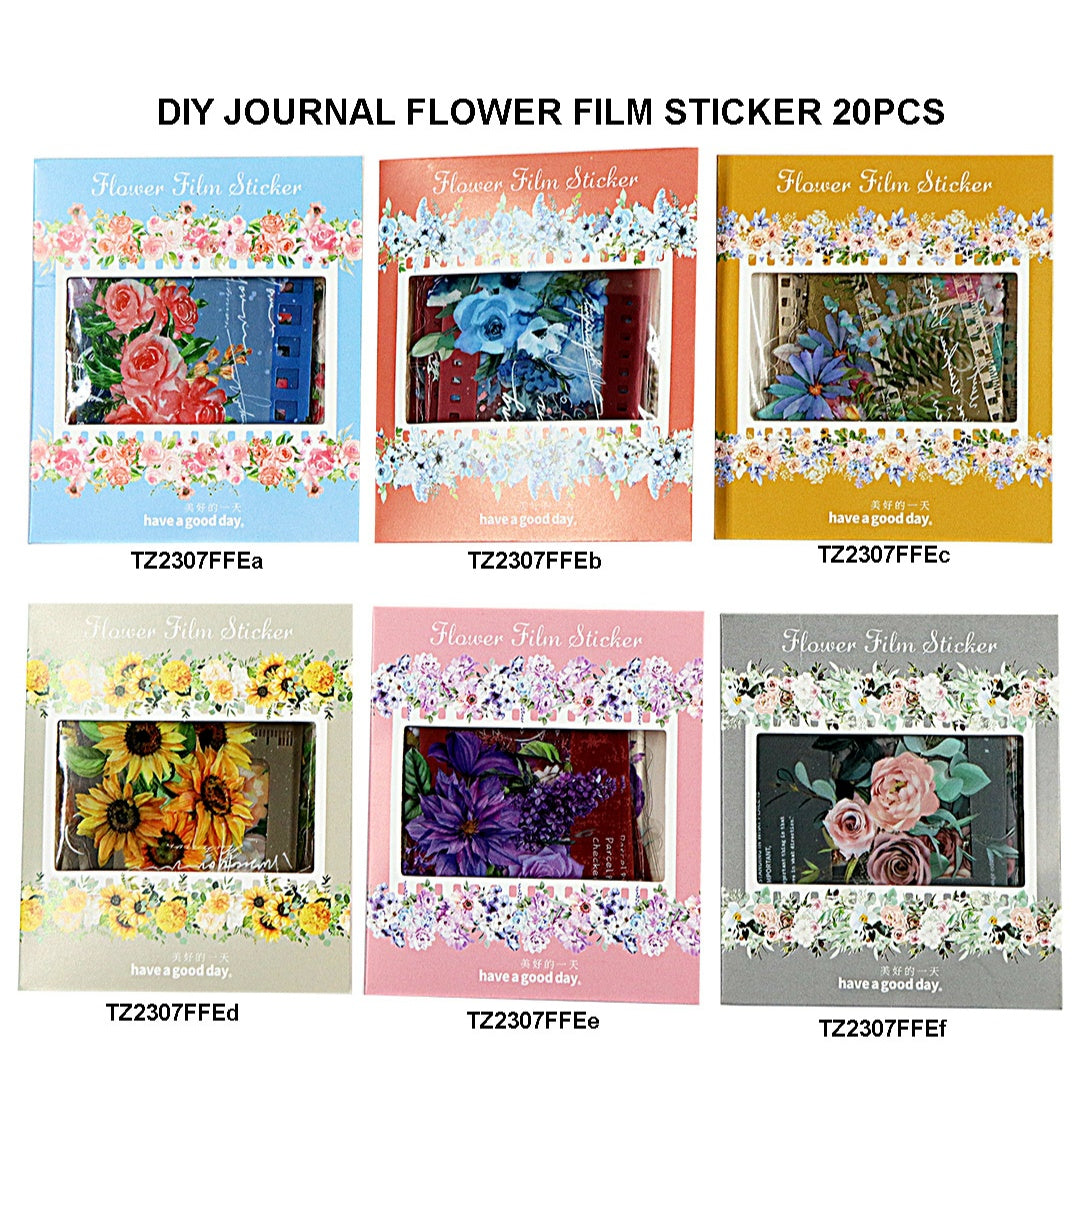 Diy Journal Flower Film Sticker 20Pcs 213 Tz2307Ffe | INKARTO